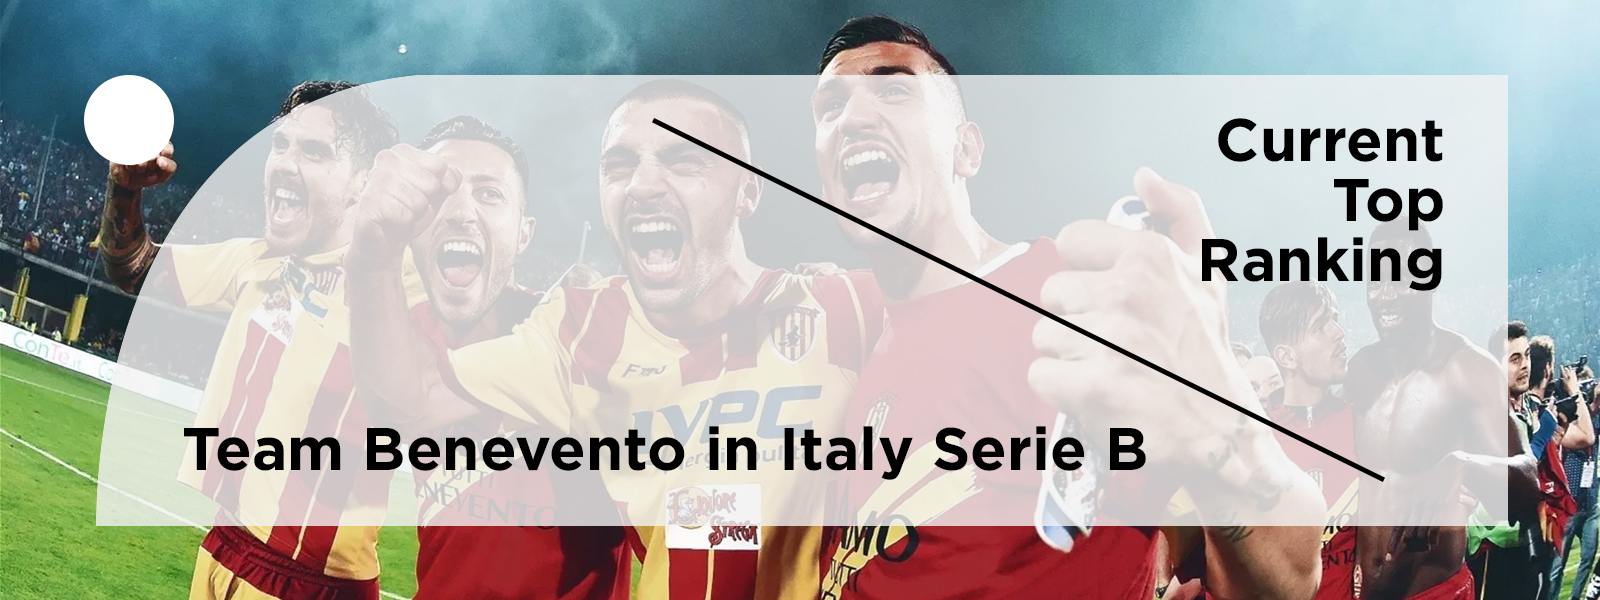 Top Ranking Team - Benevento Calcio In Italy Serie B 2020